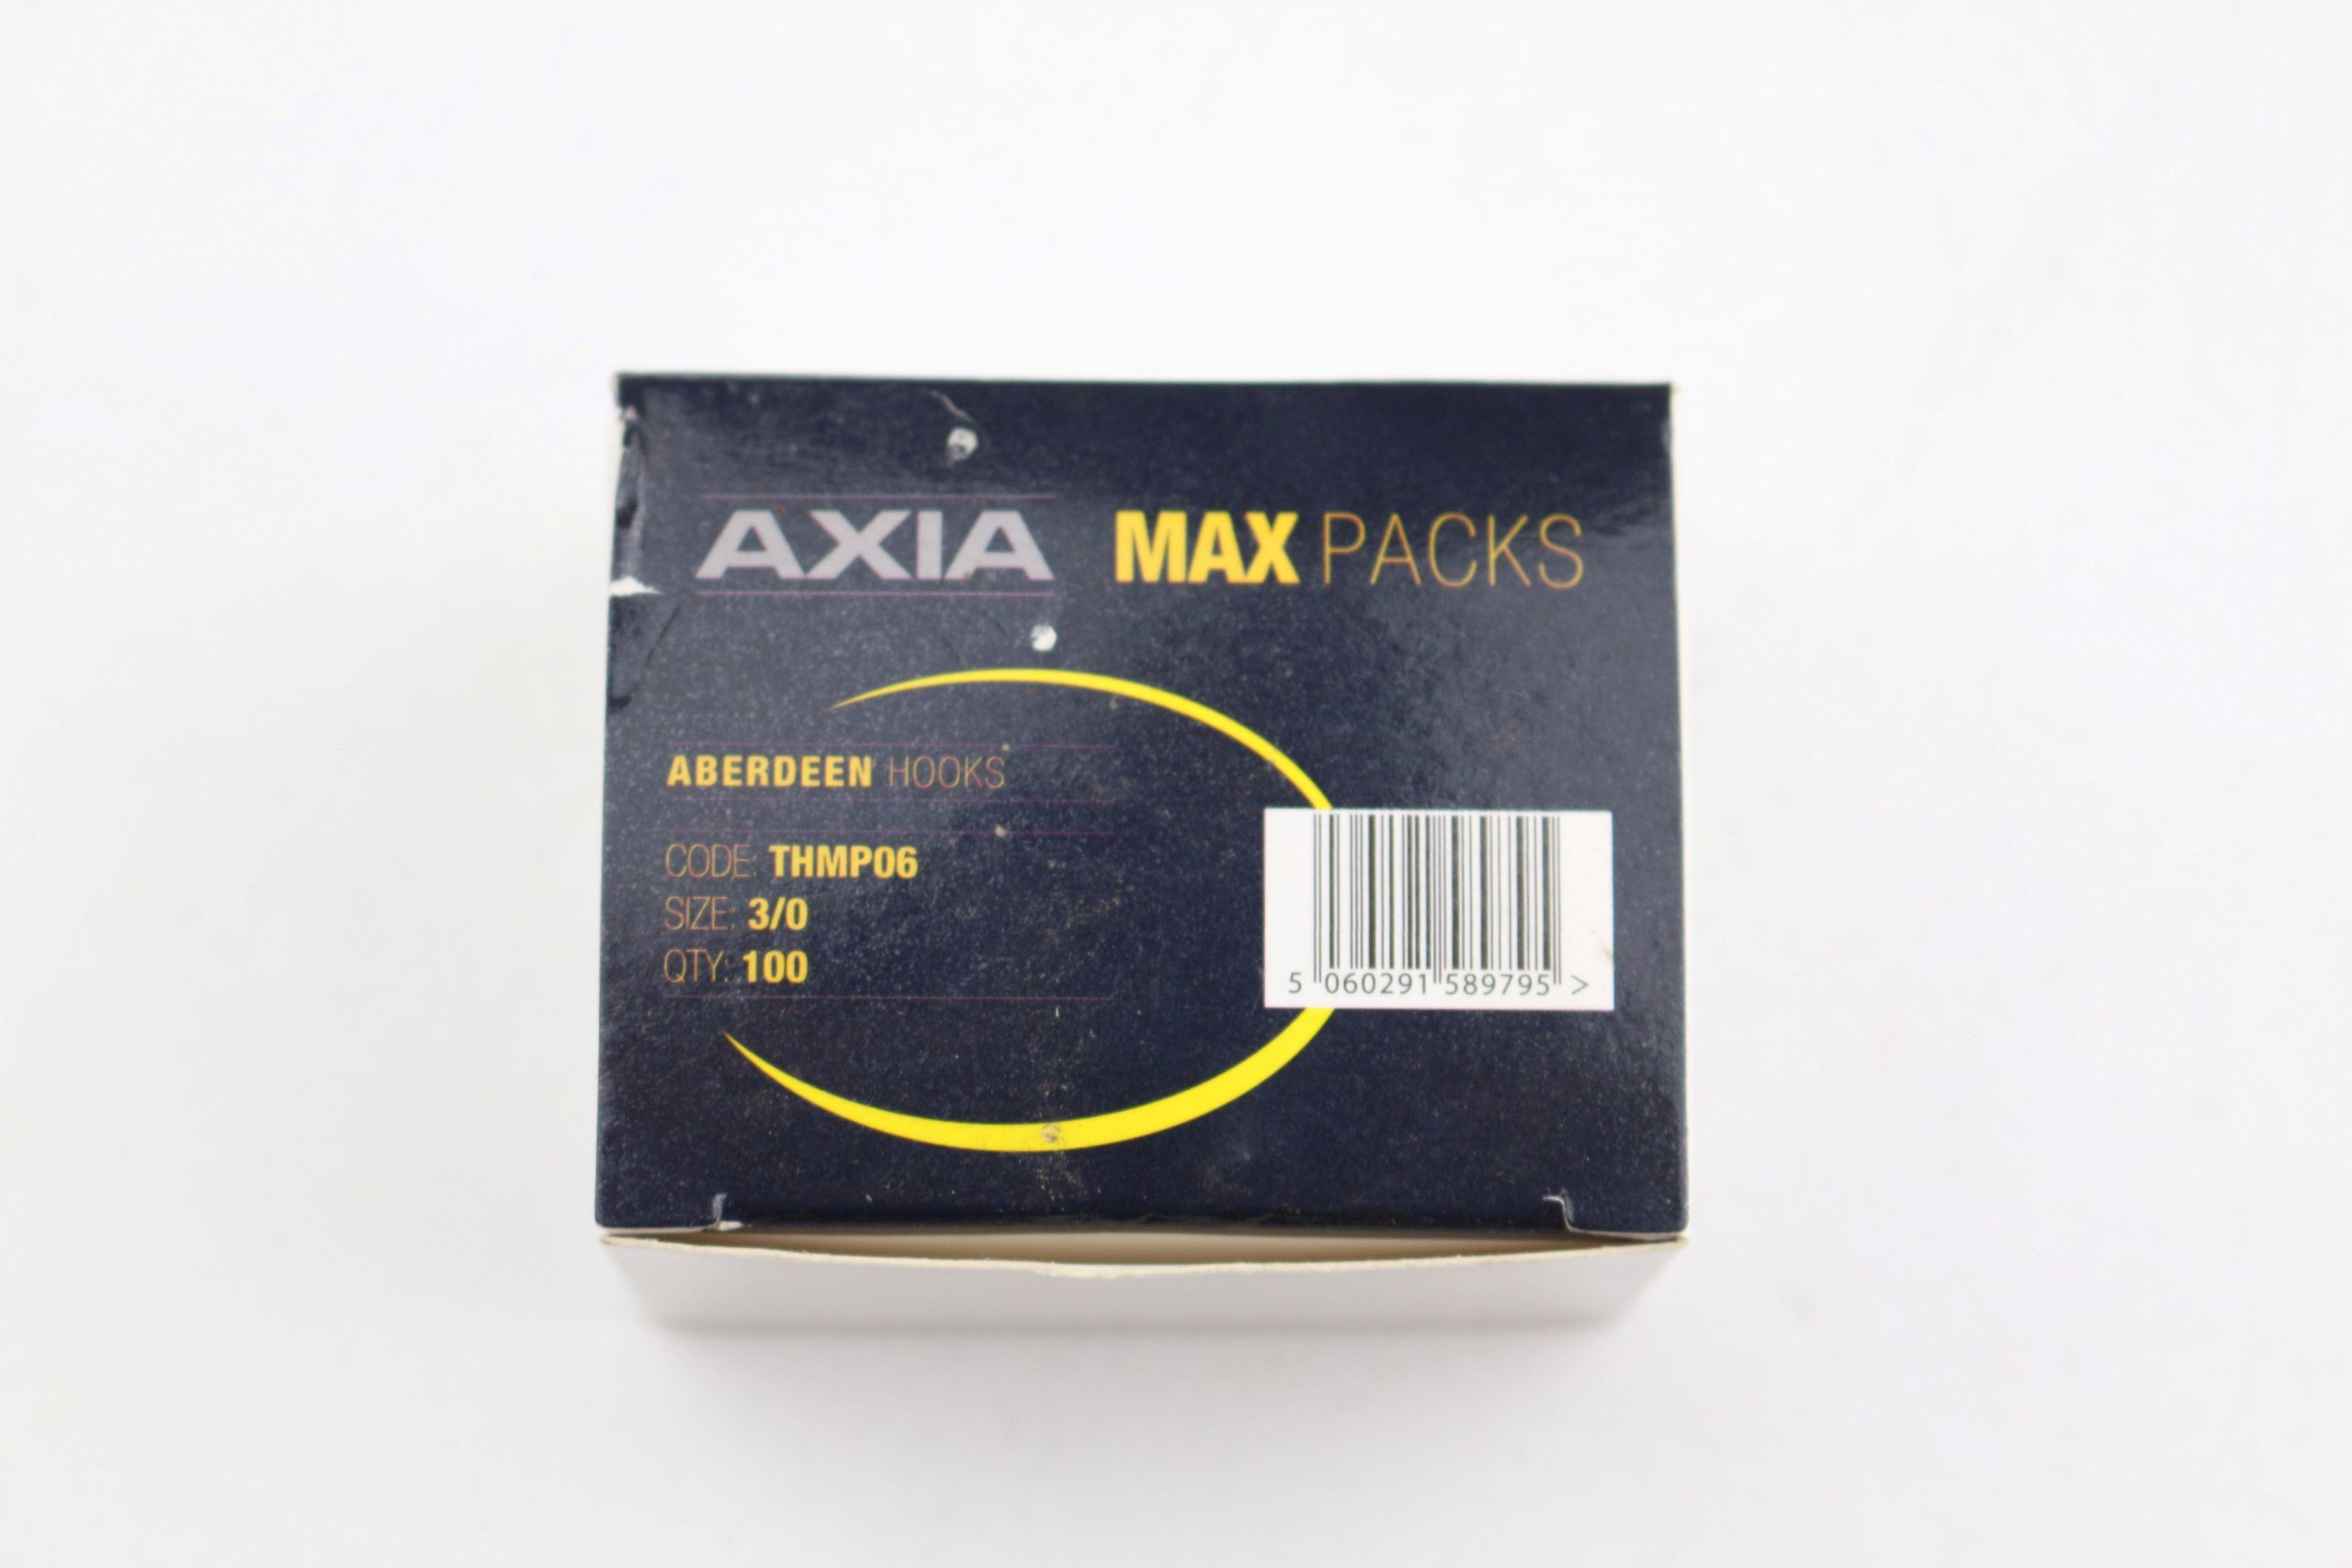 Axia Max Packs Aberdeen Hooks